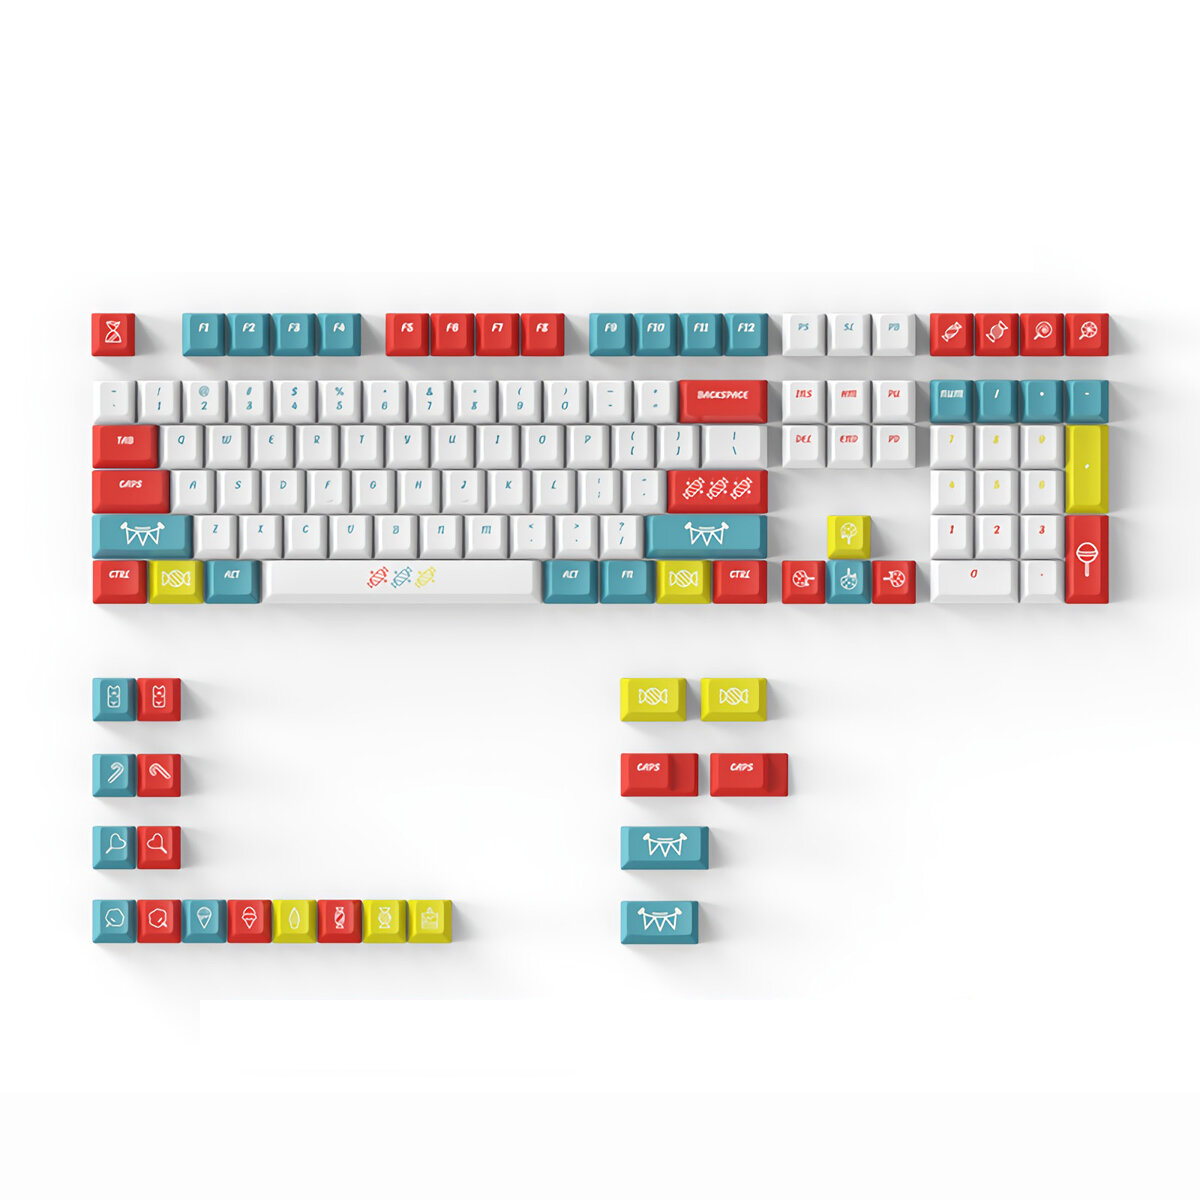 

DAGK 128/129 Keys Toffee Patch Keycap Set Cherry / XDA Profile PBT Sublimation Keycaps for Механический Клавиатуры